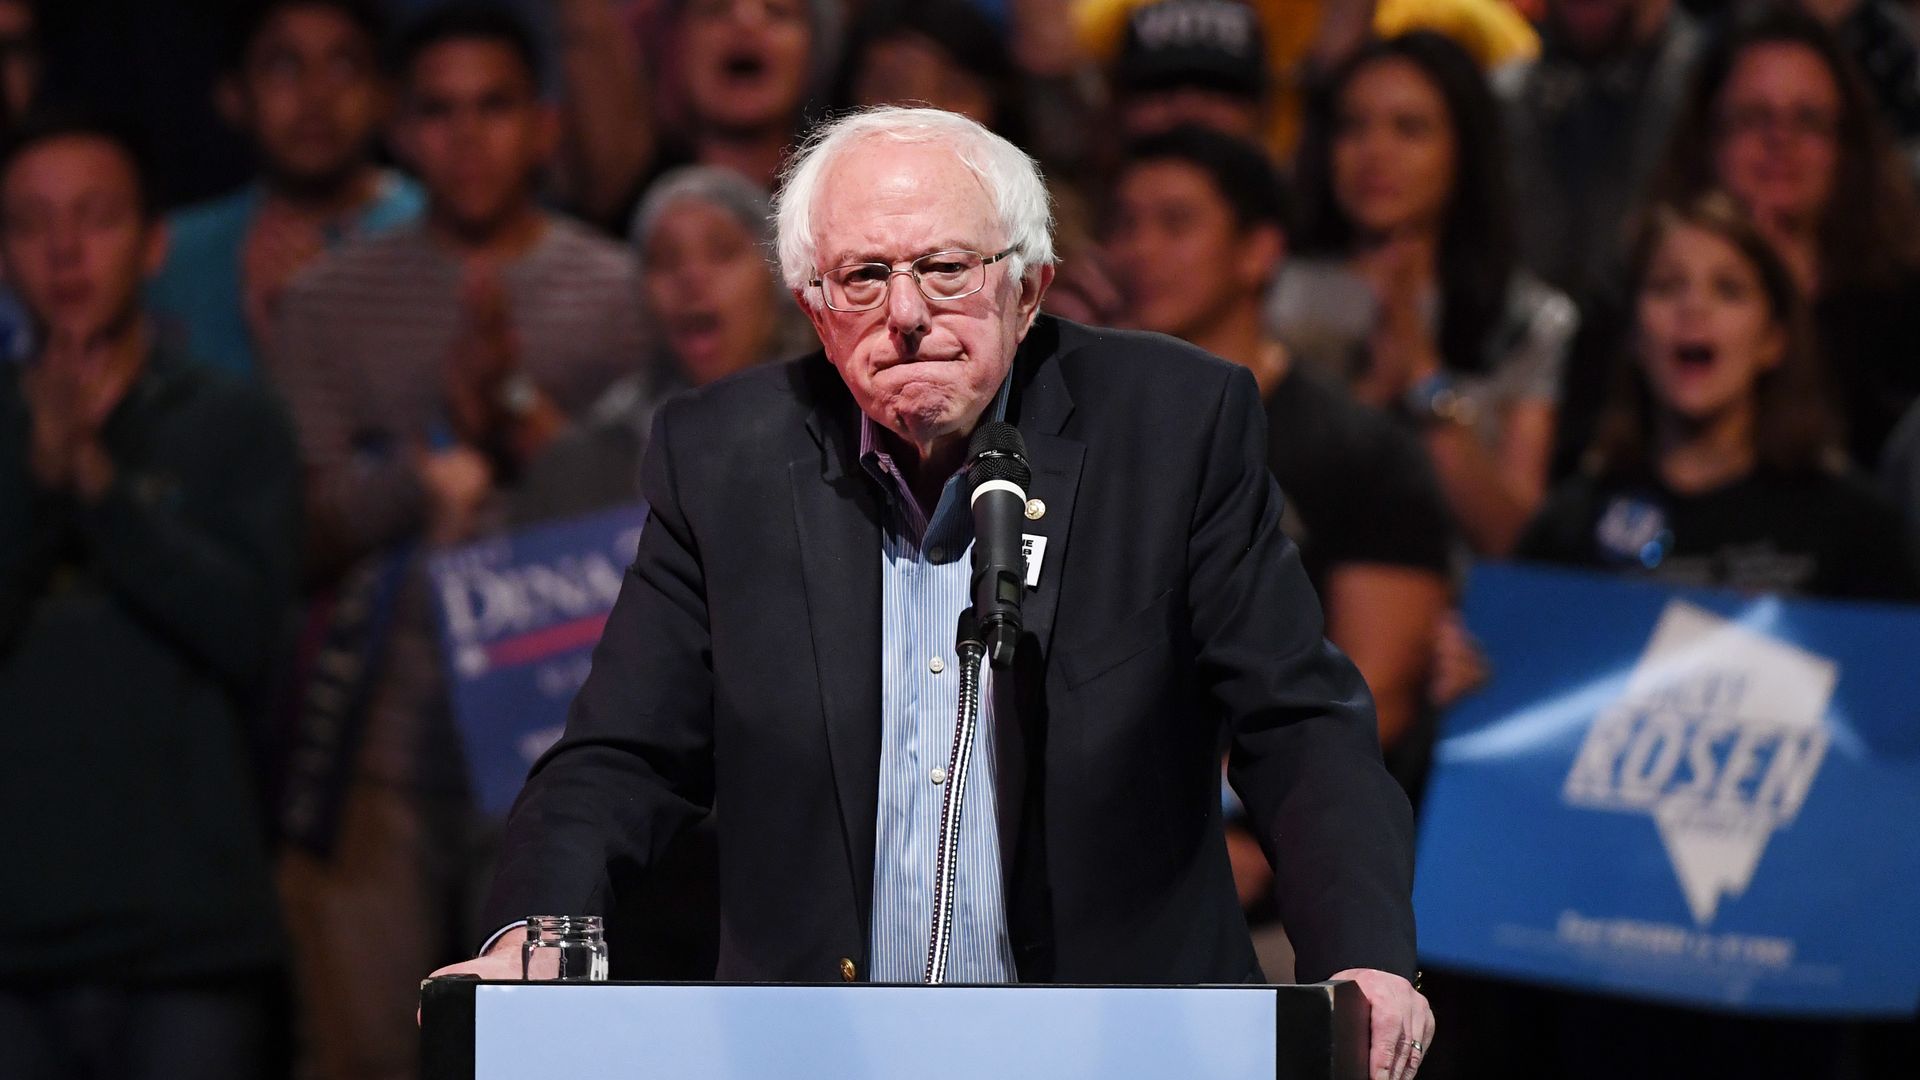 Bernie Sanders at a podium. 